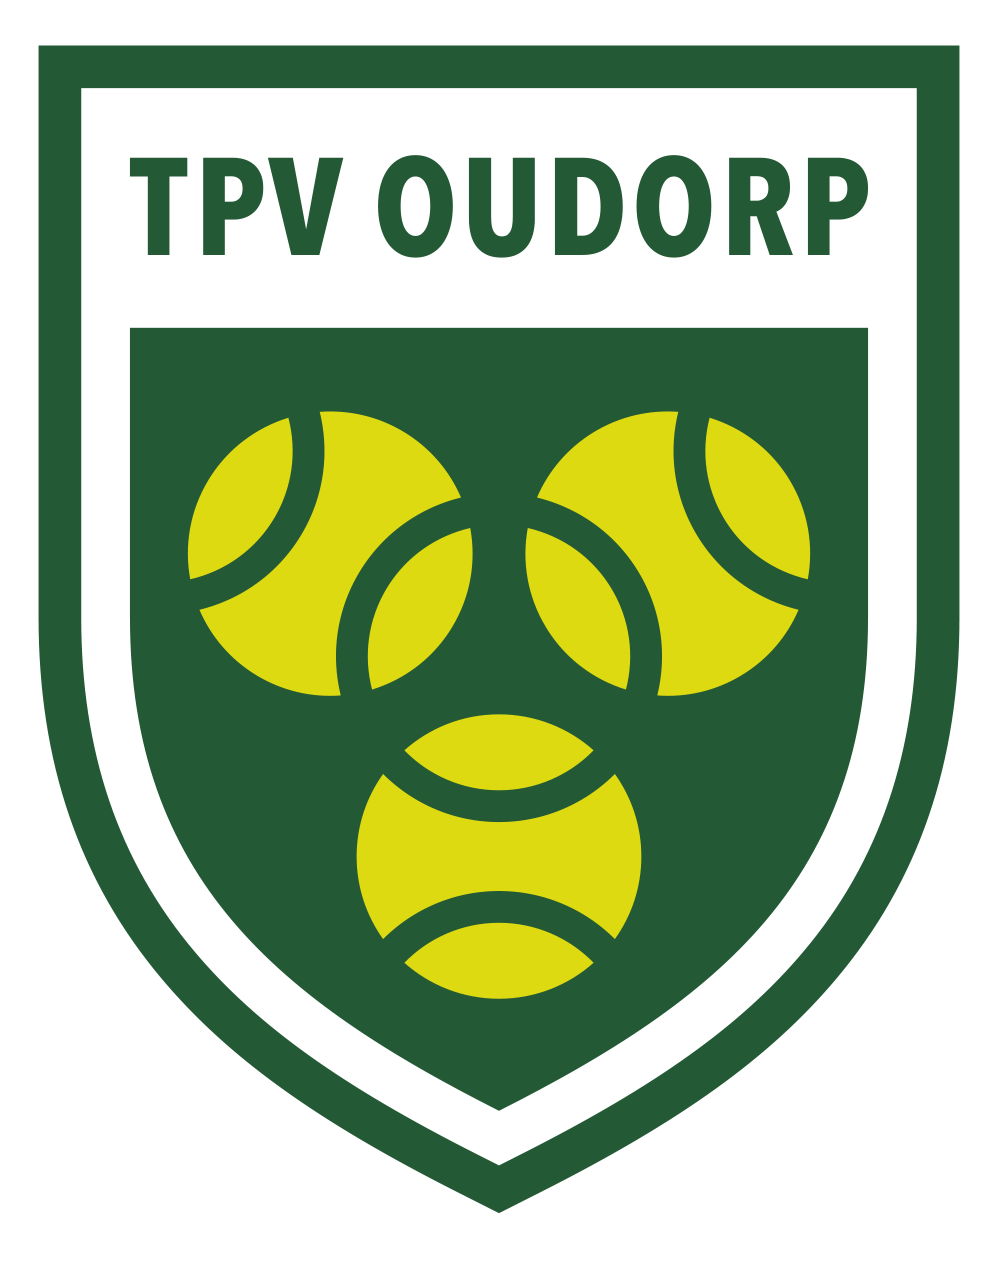 TV Oudorp